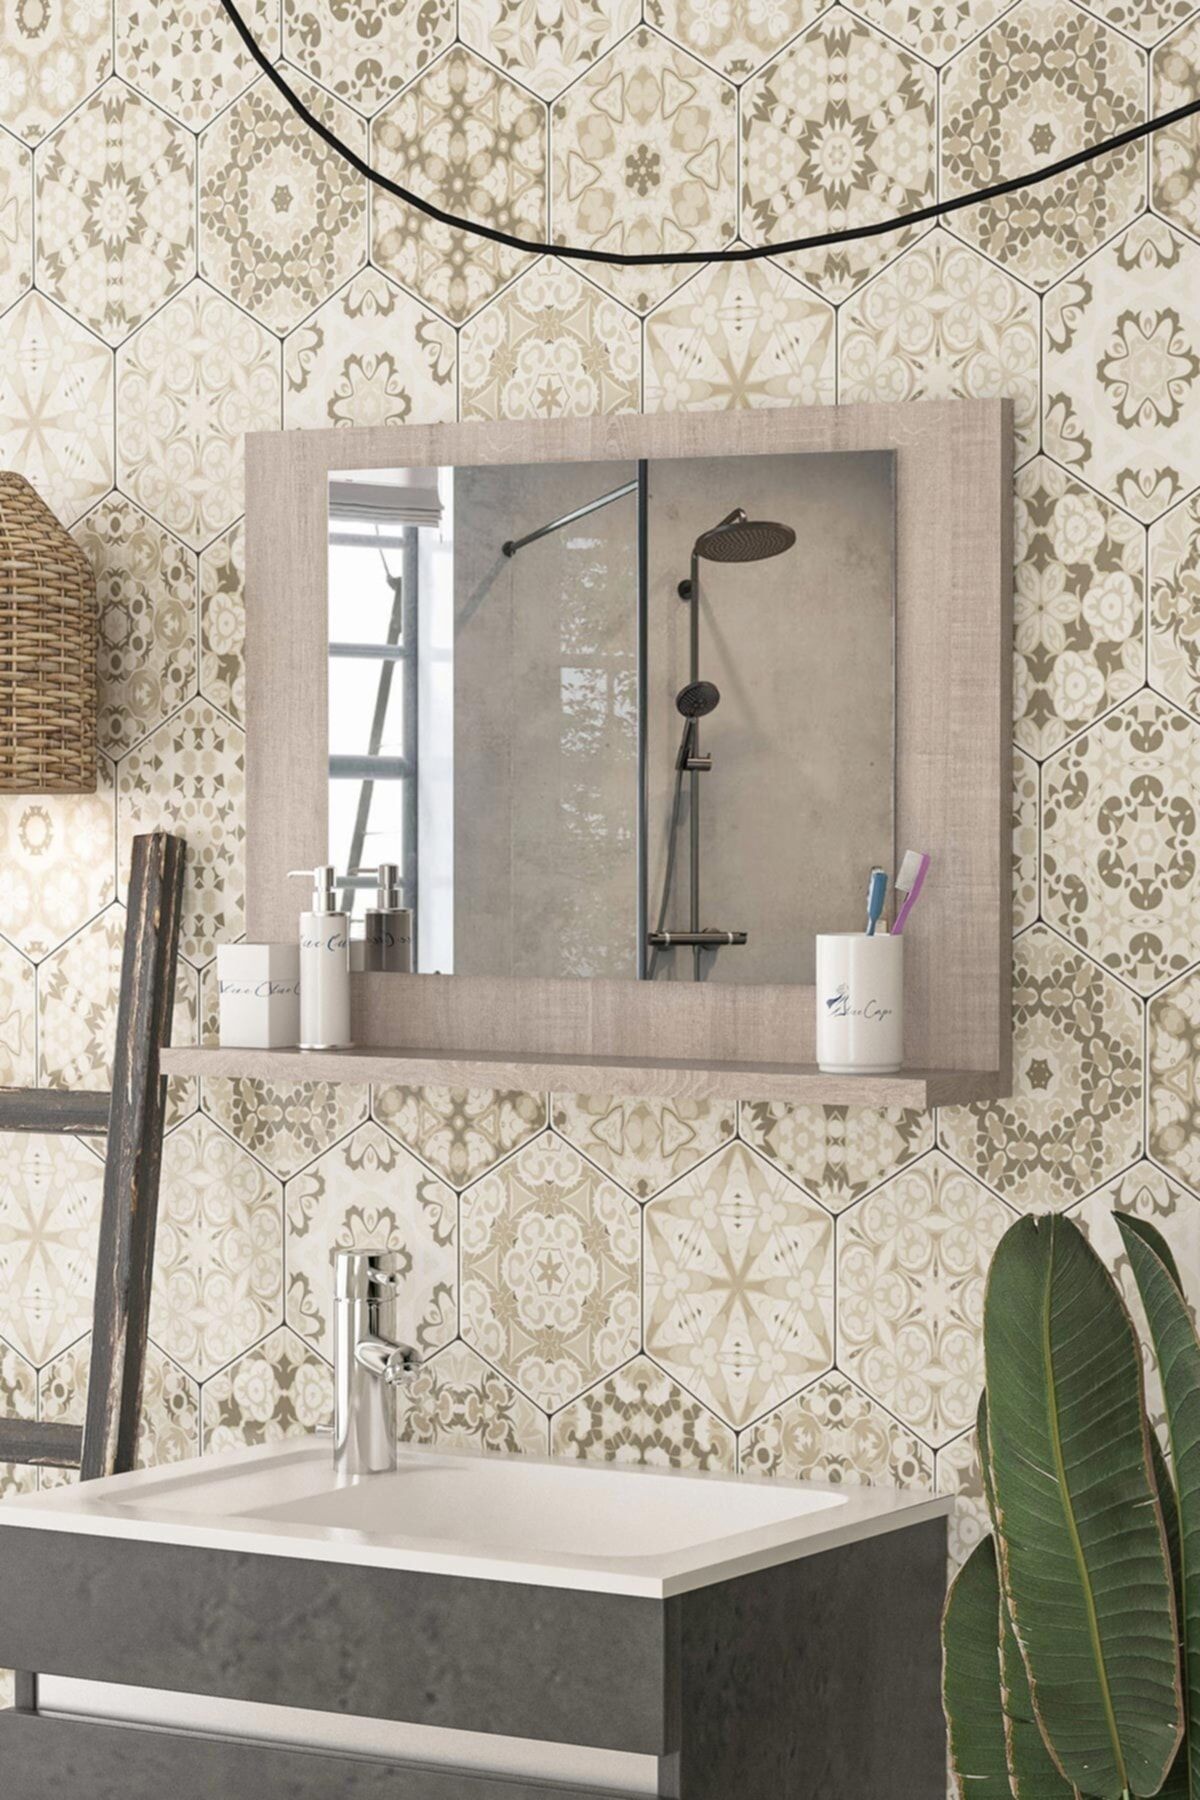 Resmo Modena 60x45cm Lizbon Raflı Ayna Dresuar Hol Koridor Duvar Salon Banyo Wc Ofis Çocuk Yatak Odası Boy